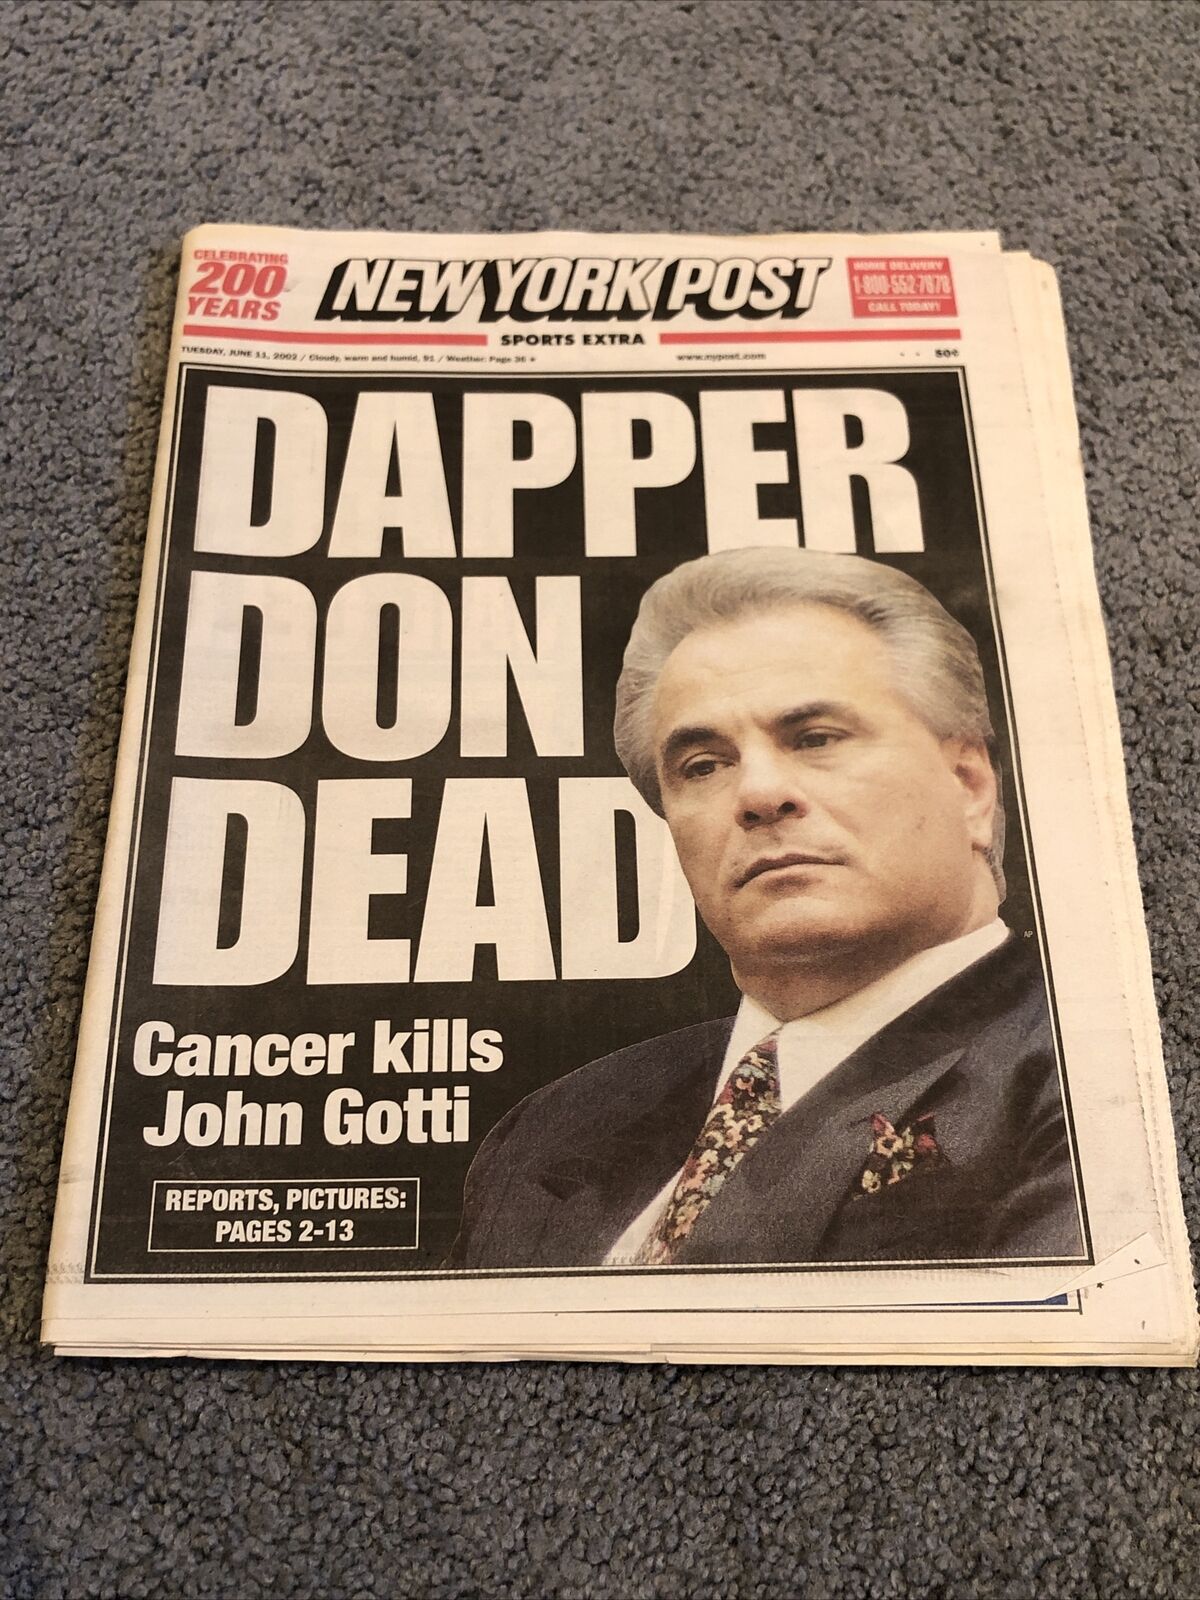 New York Post June 11, 2002 “DAPPER DON DEAD” Cancer Kills John Gotti Newspaper